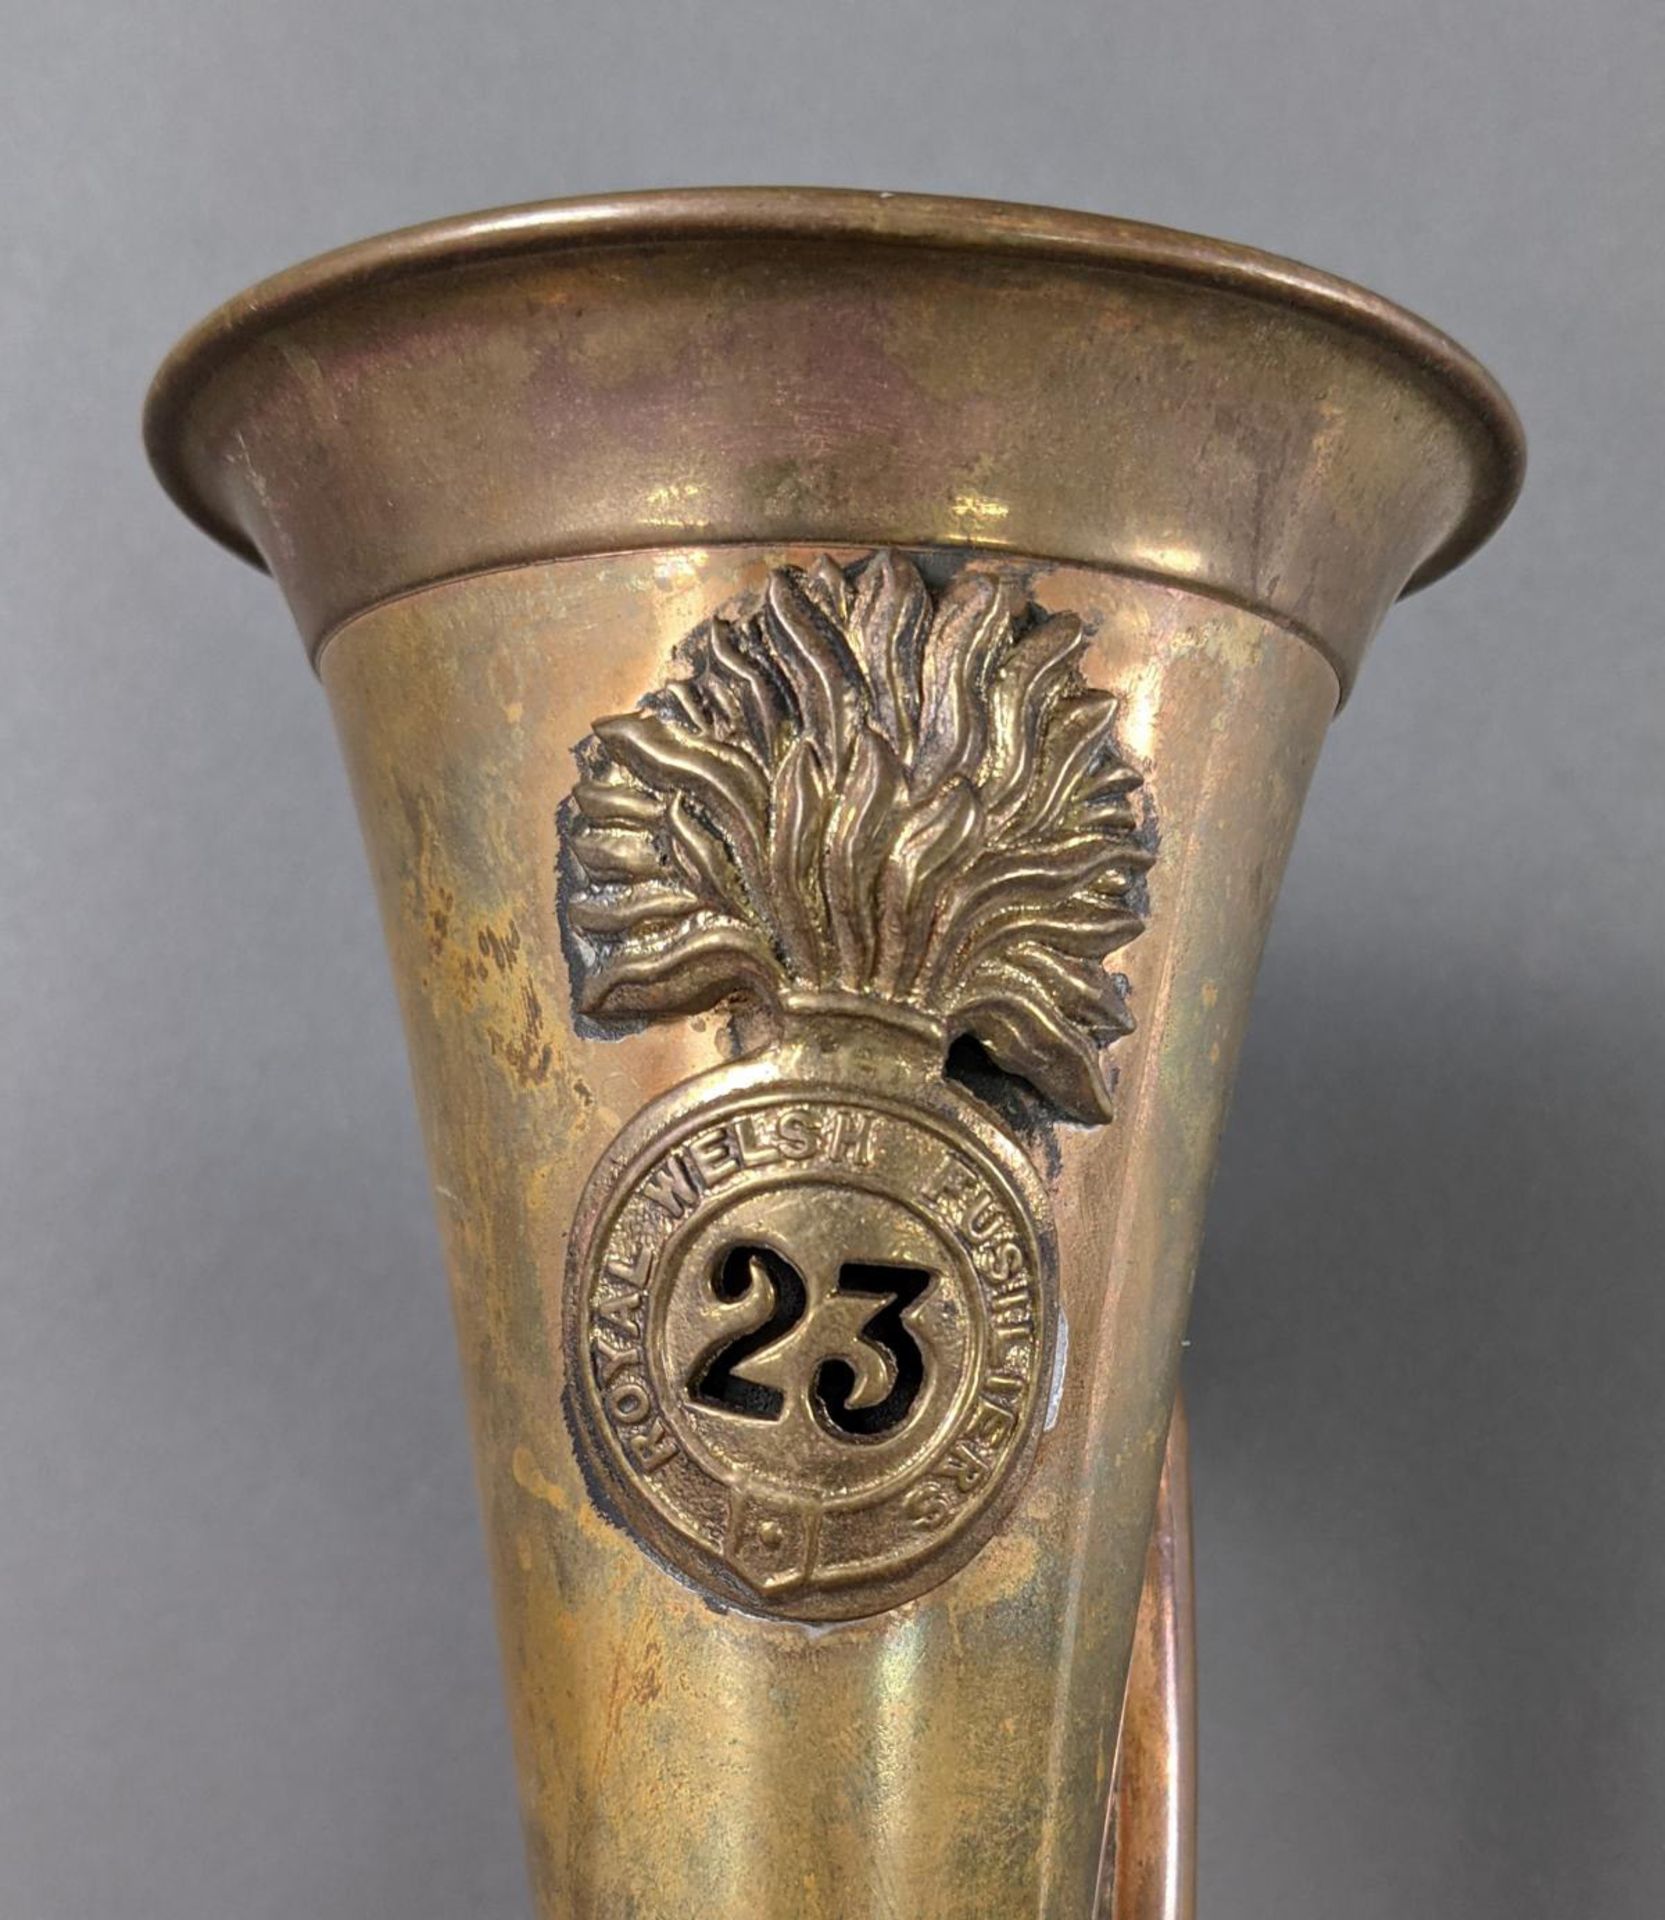 Englische Horn/Signal-Trompete, Royal Welsh Fusiliers 23 Regiment, 19. Jahrhundert - Image 5 of 5